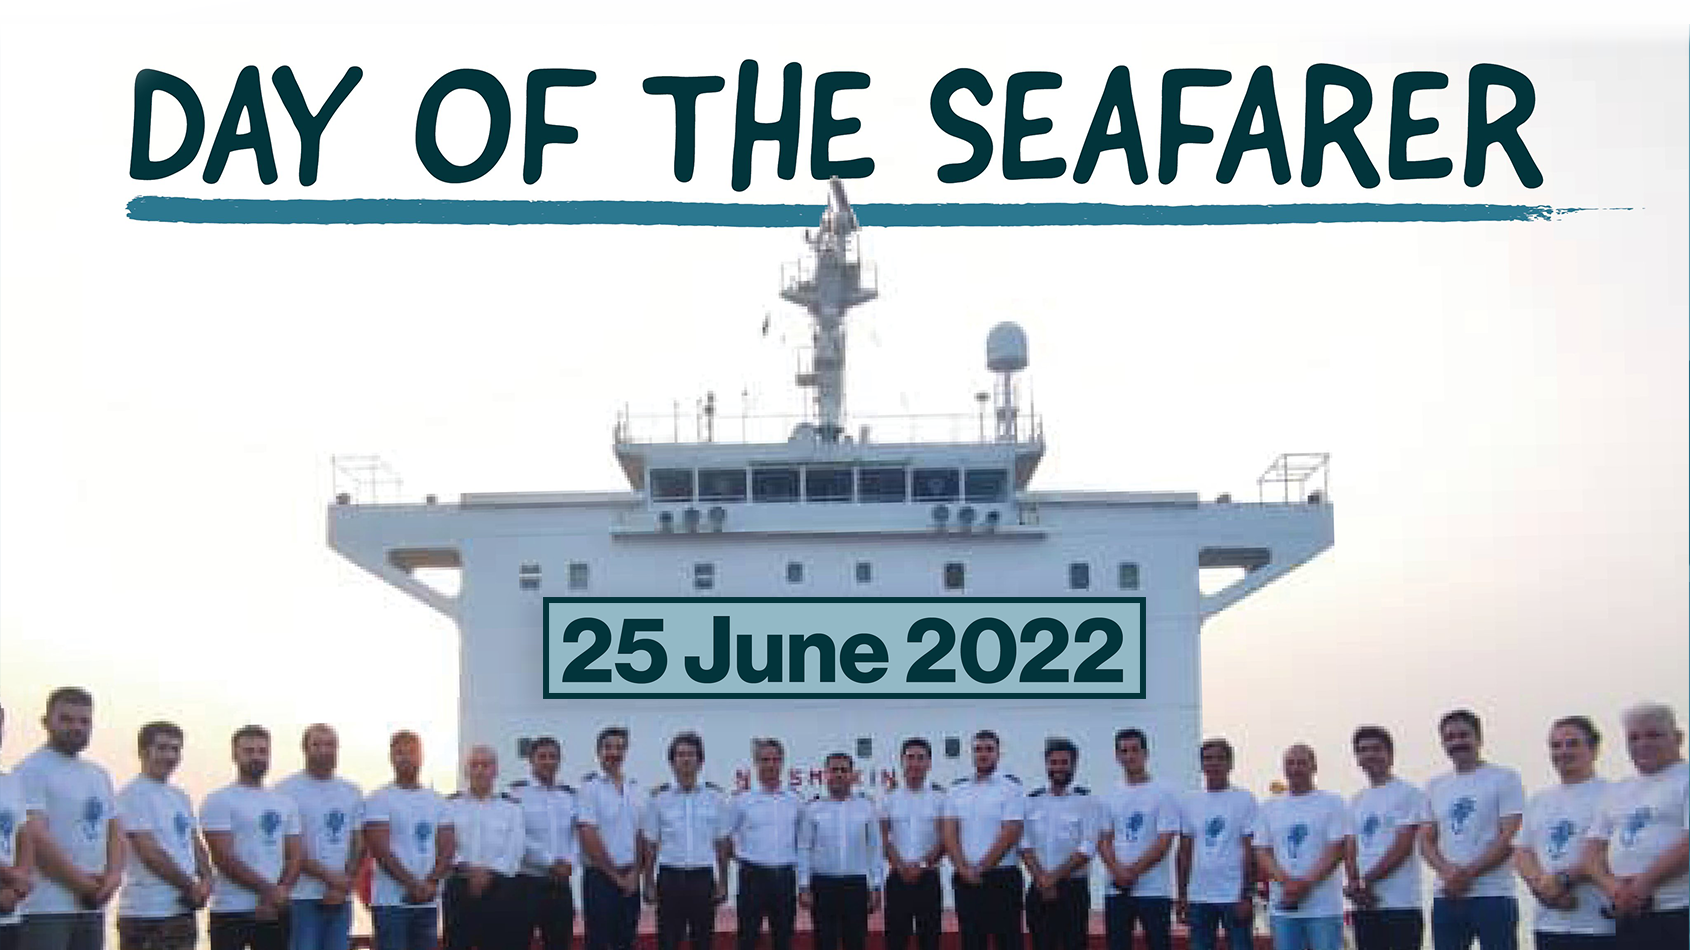 Seafarers unions celebrate #DayoftheSeafarer 2022 ITF Seafarers